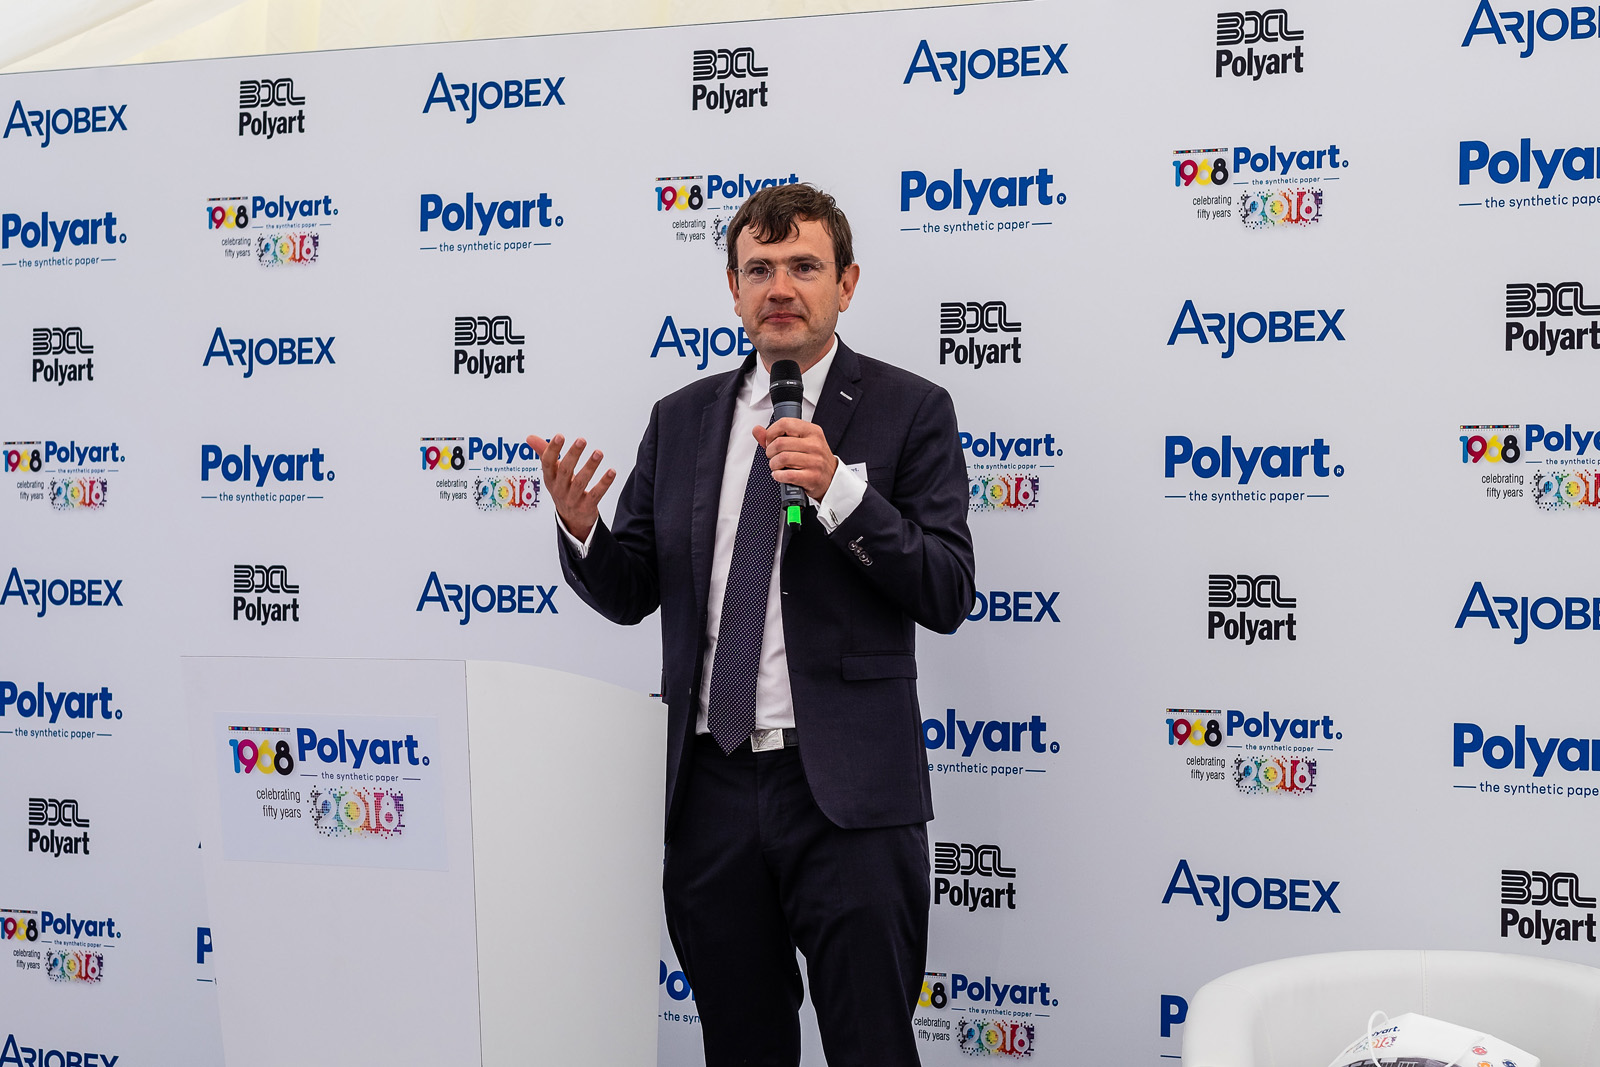 Polyart - Arjobex celebrates 50th anniversary